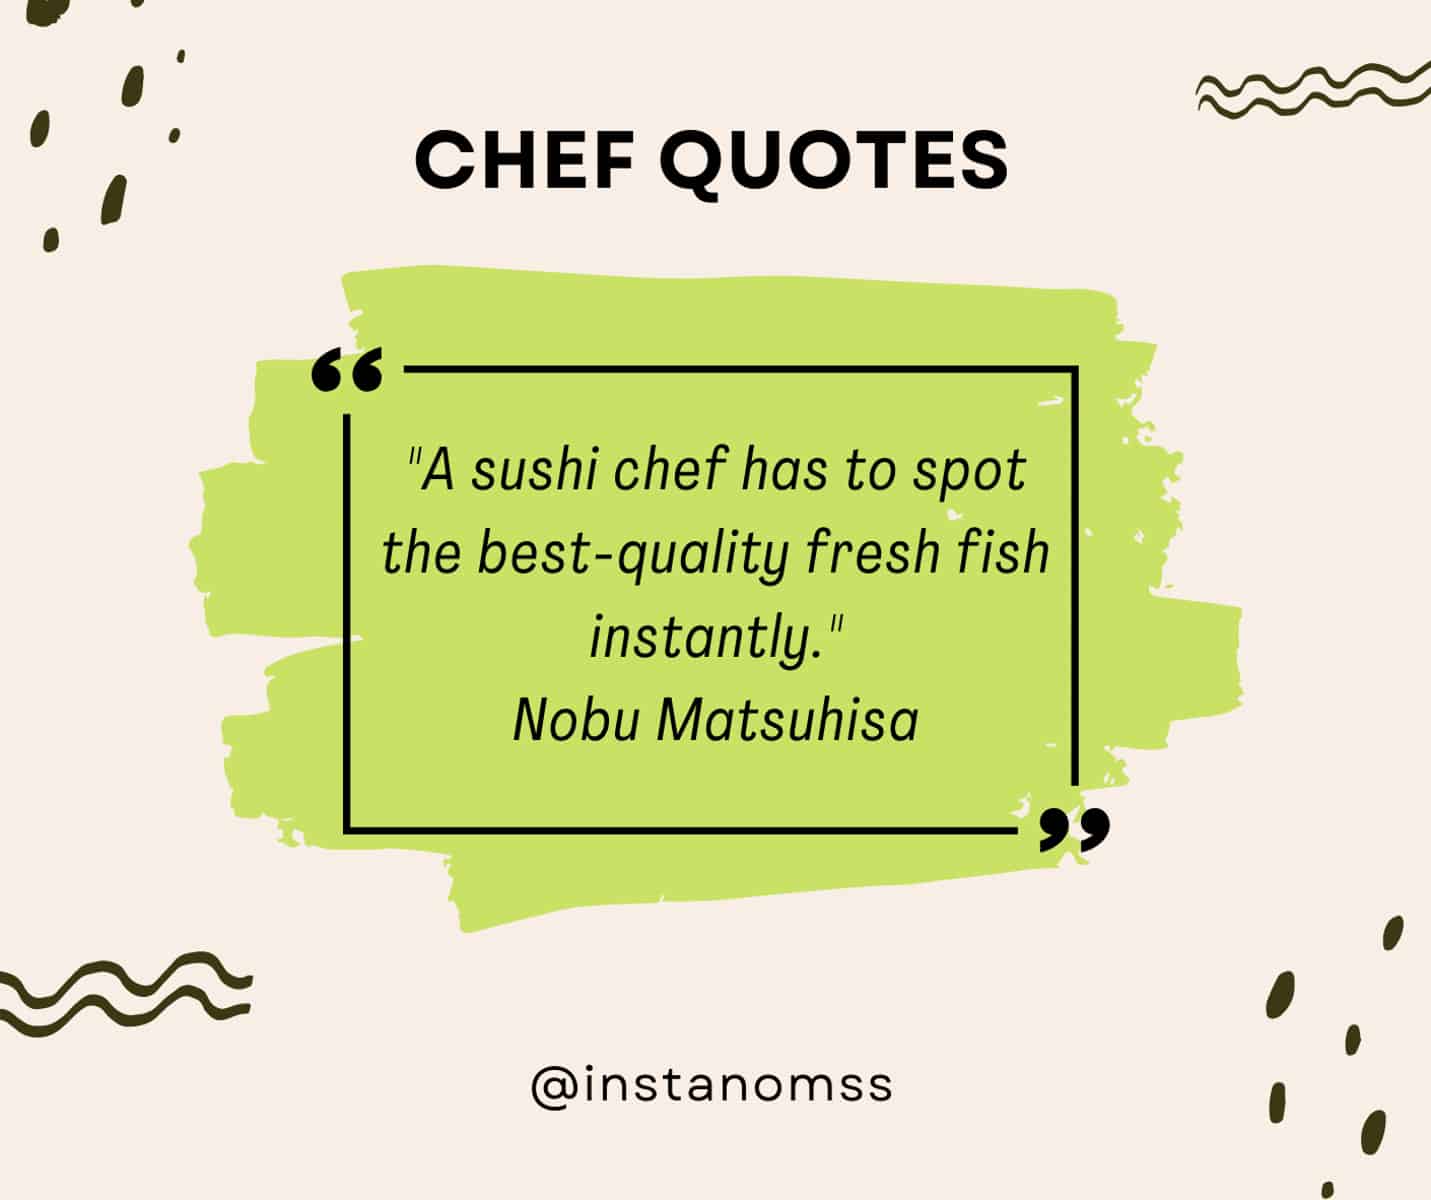 "A sushi chef has to spot the best-quality fresh fish instantly." Nobu Matsuhisa